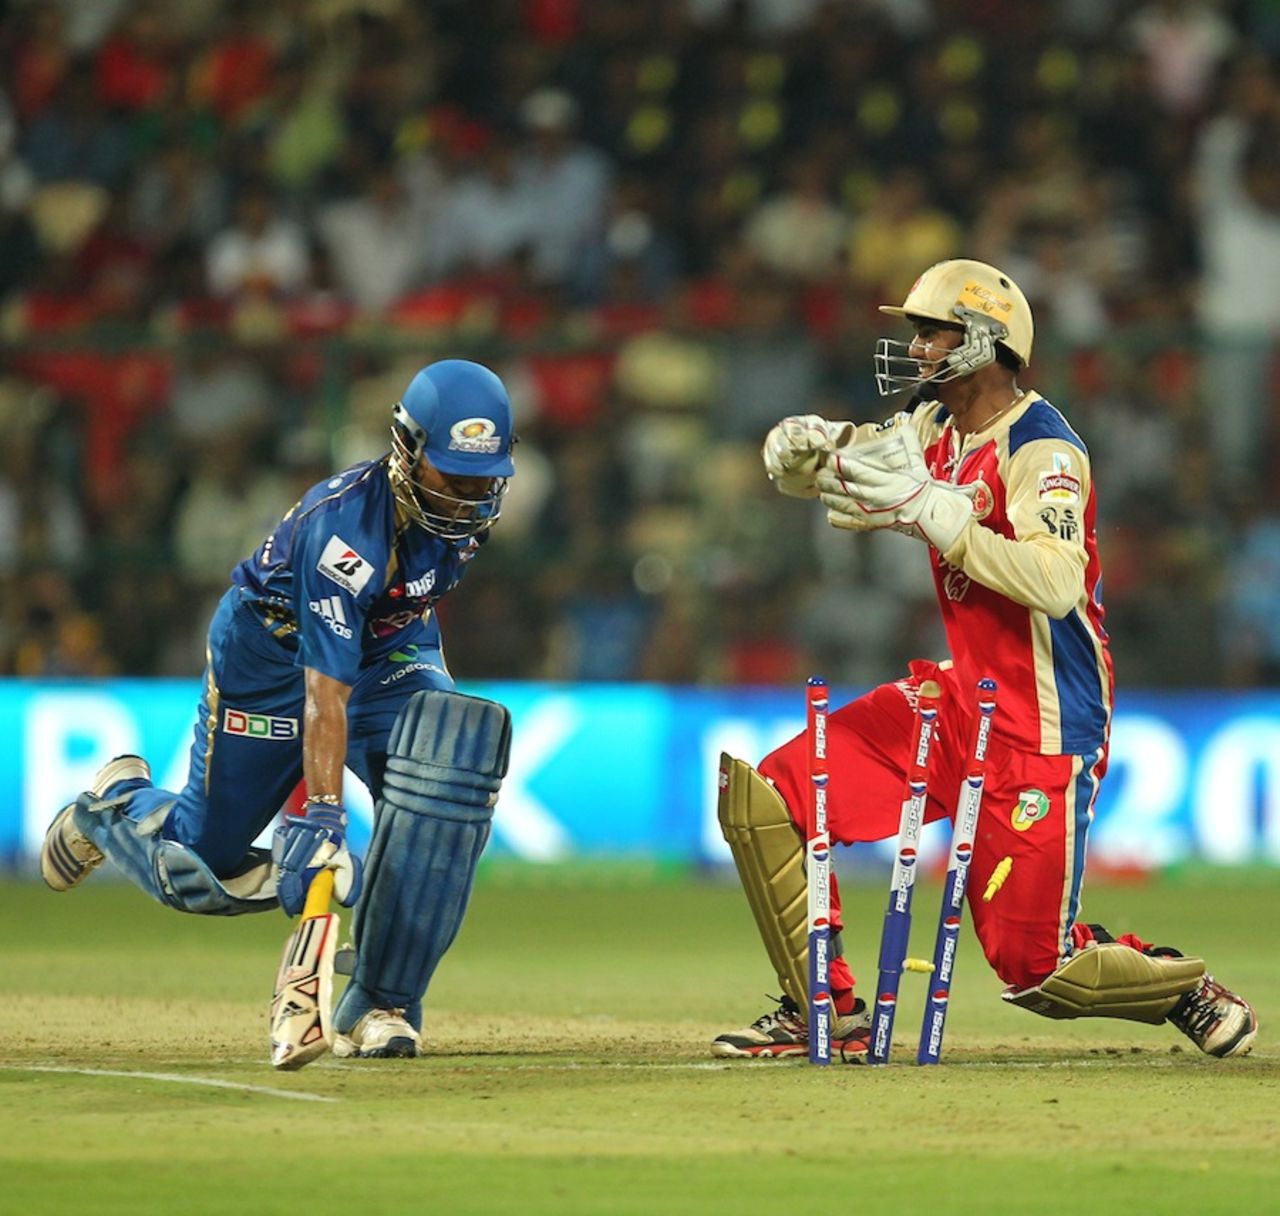 Sachin Tendulkar falls short of his crease, Royal Challengers Bangalore v Mumbai Indians, IPL, Bangalore, April 4, 2013